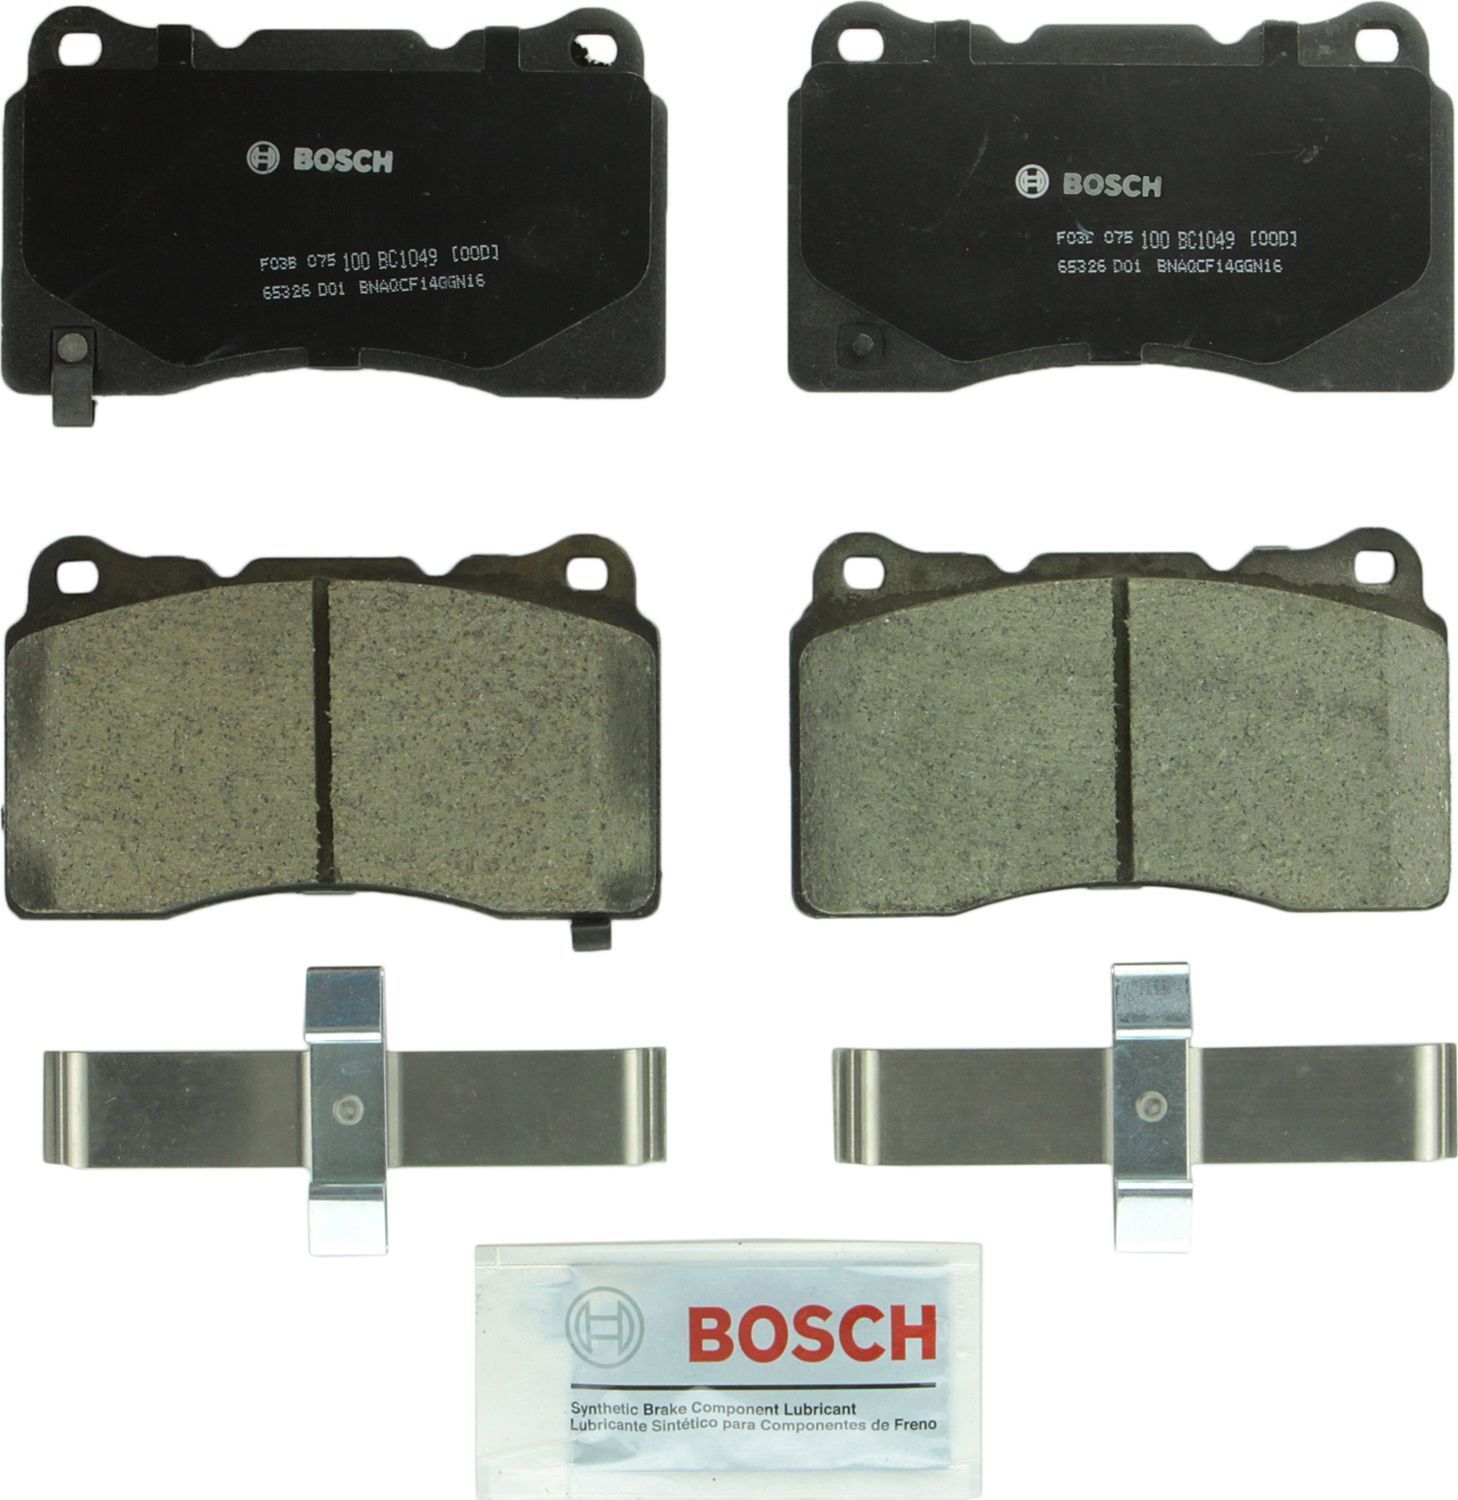 BOSCH BRAKE - Bosch QuietCast Brake Pad Ceramic Brake Pads (Front) - BQC BC1049